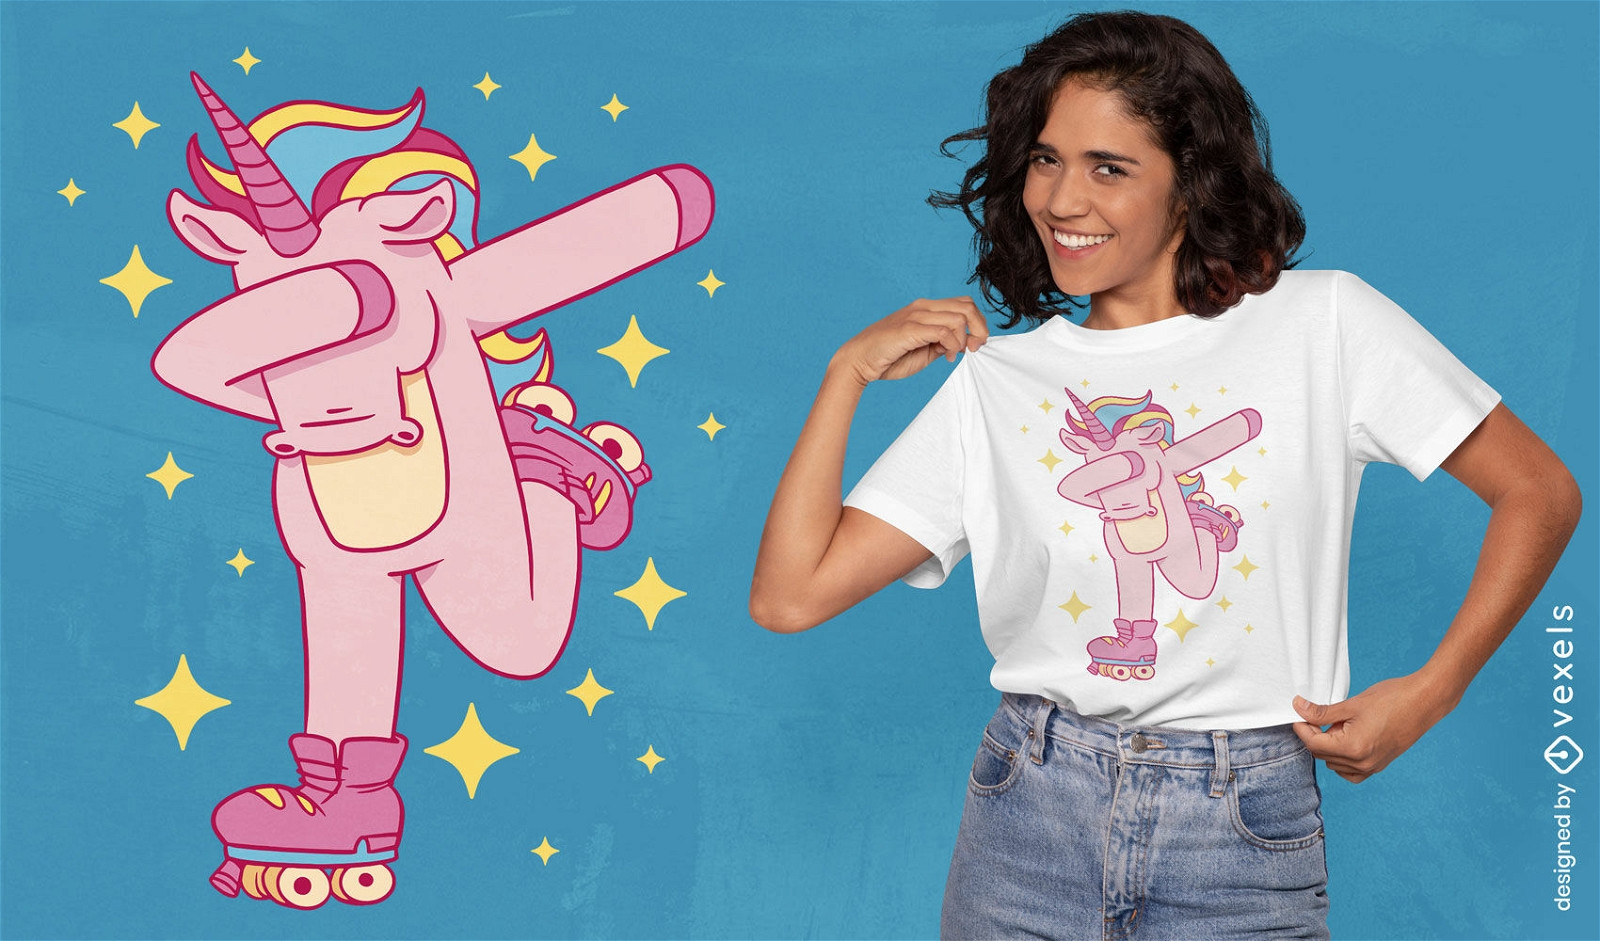 Unicorn dab roller skating cute cartoon t-shirt design